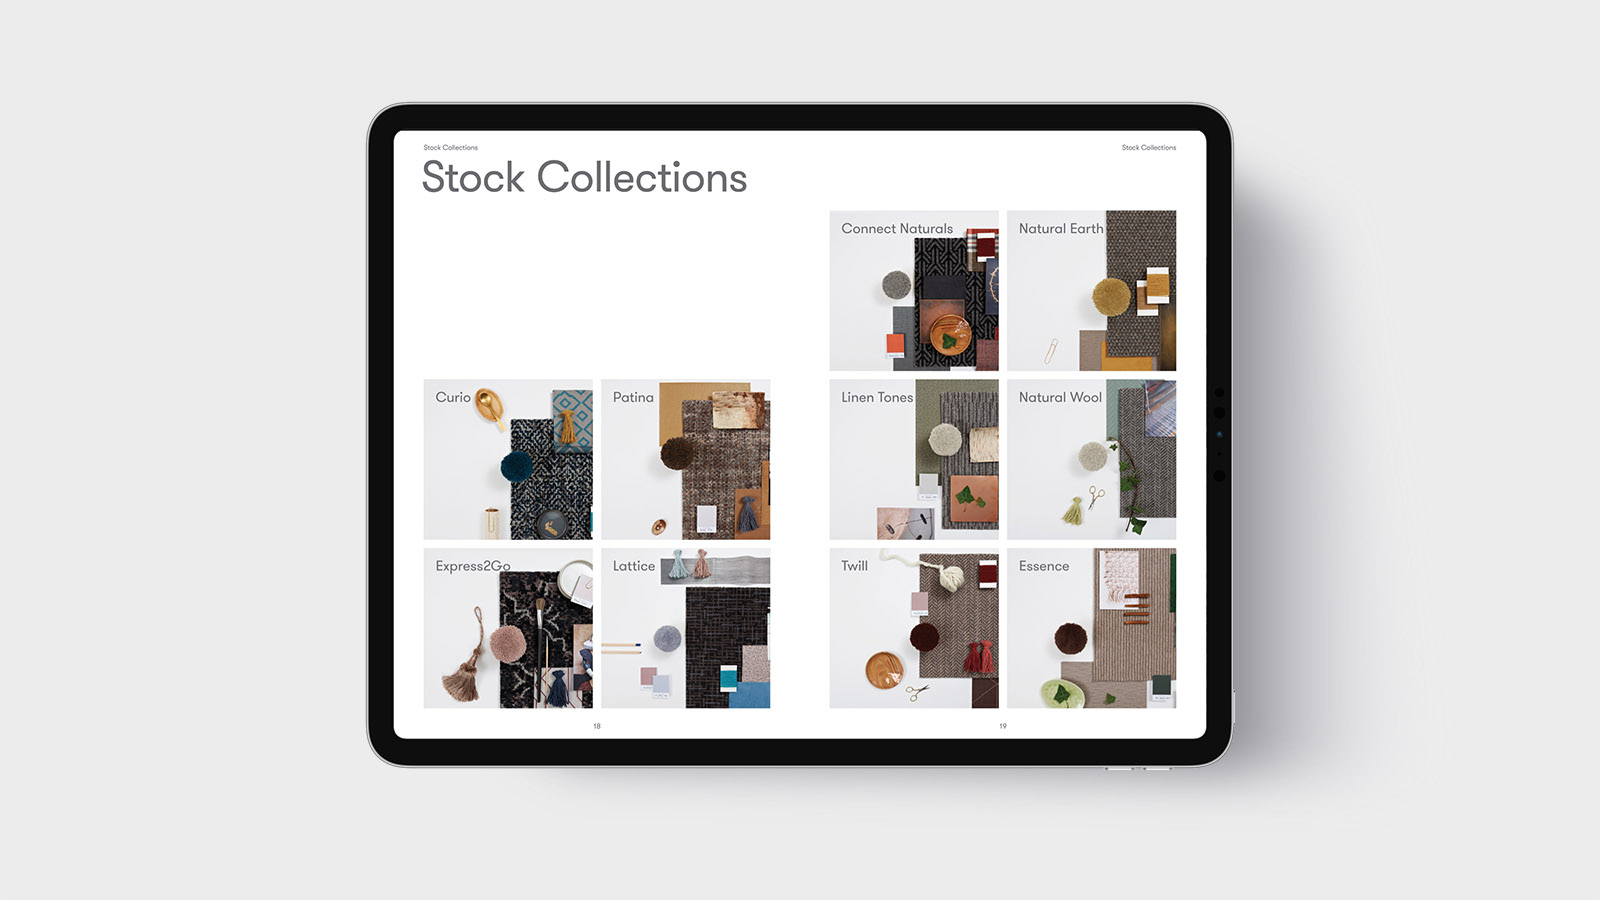 Newhey Carpets ebook design and production – Design by Neil Holroyd Leeds based freelance designer